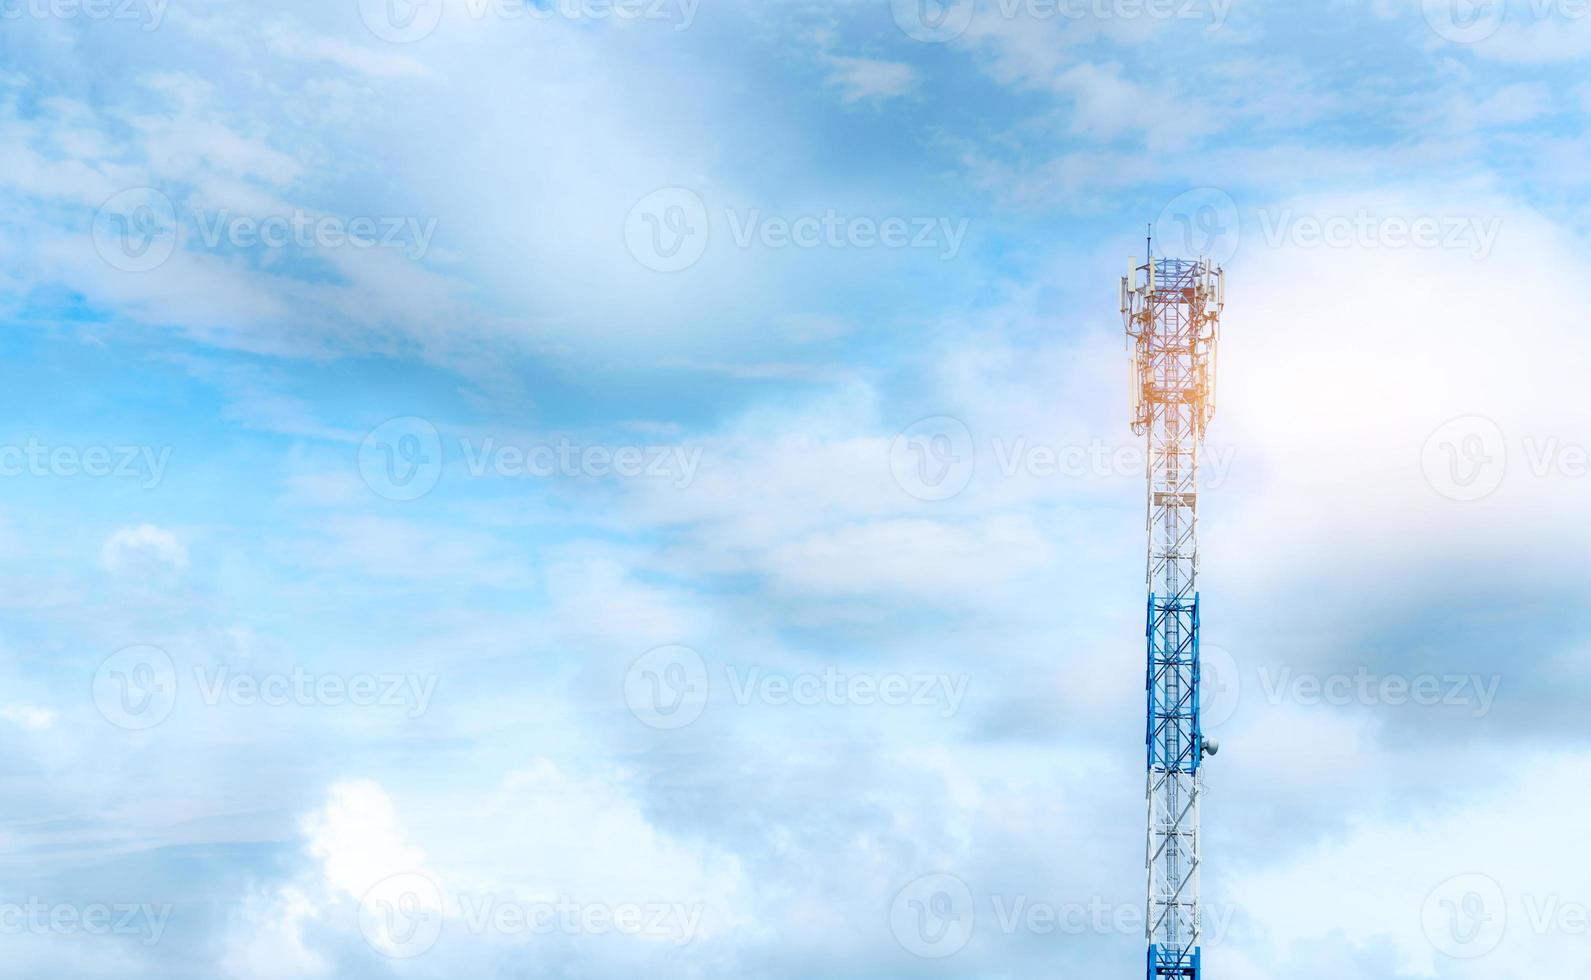 telecommunicatietoren met duidelijke blauwe hemelachtergrond. antenne op blauwe hemel. radio- en satellietpaal. communicatietechnologie. telecommunicatie-industrie. mobiel of telecom 5g-netwerk. technologie foto